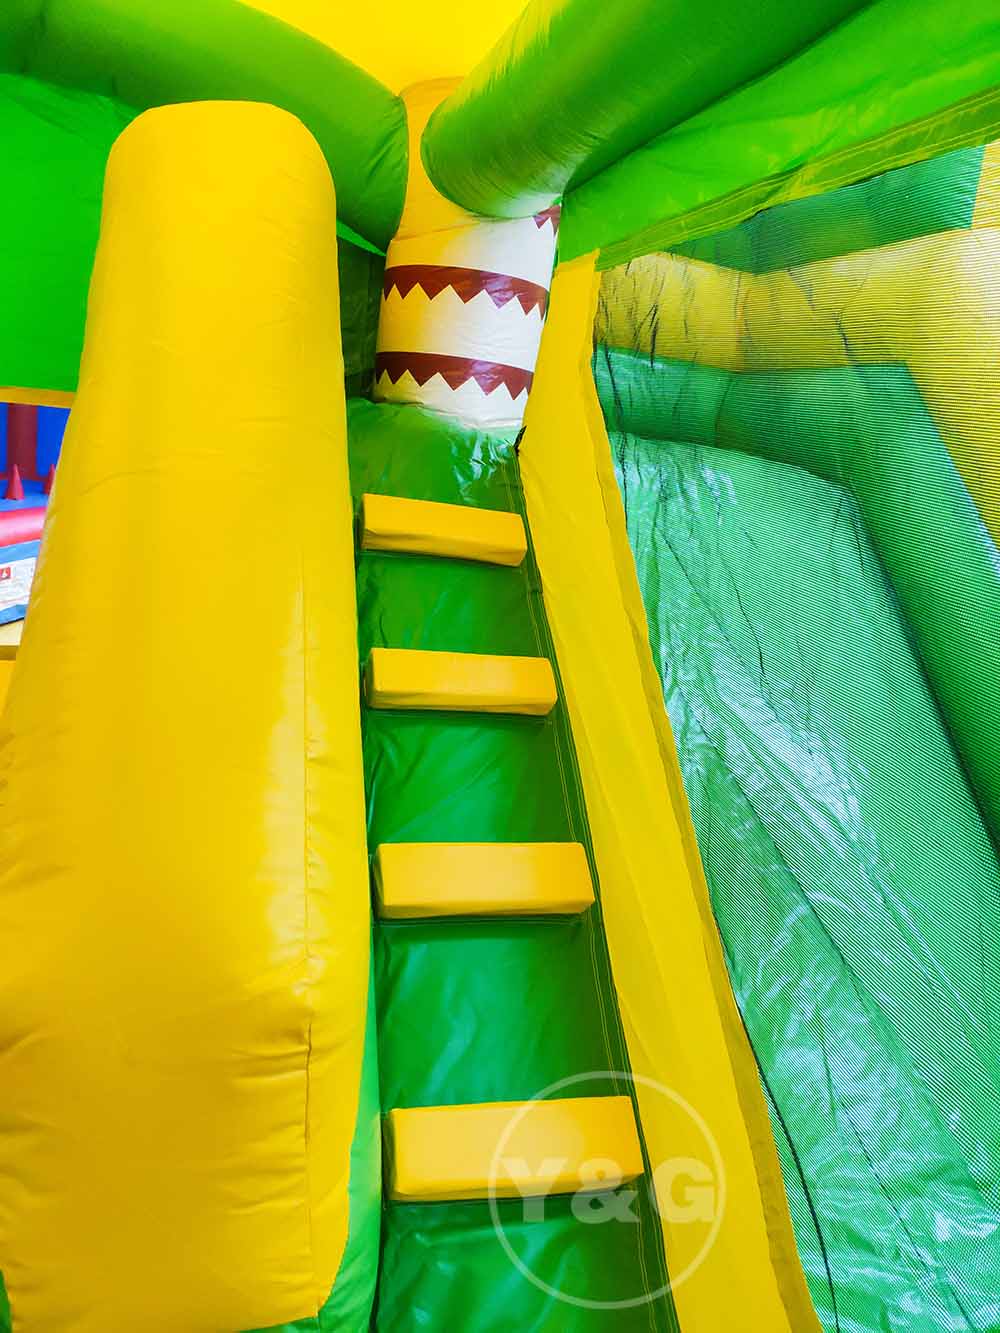 Inflatable Animal Forest Bounce HouseYG-110